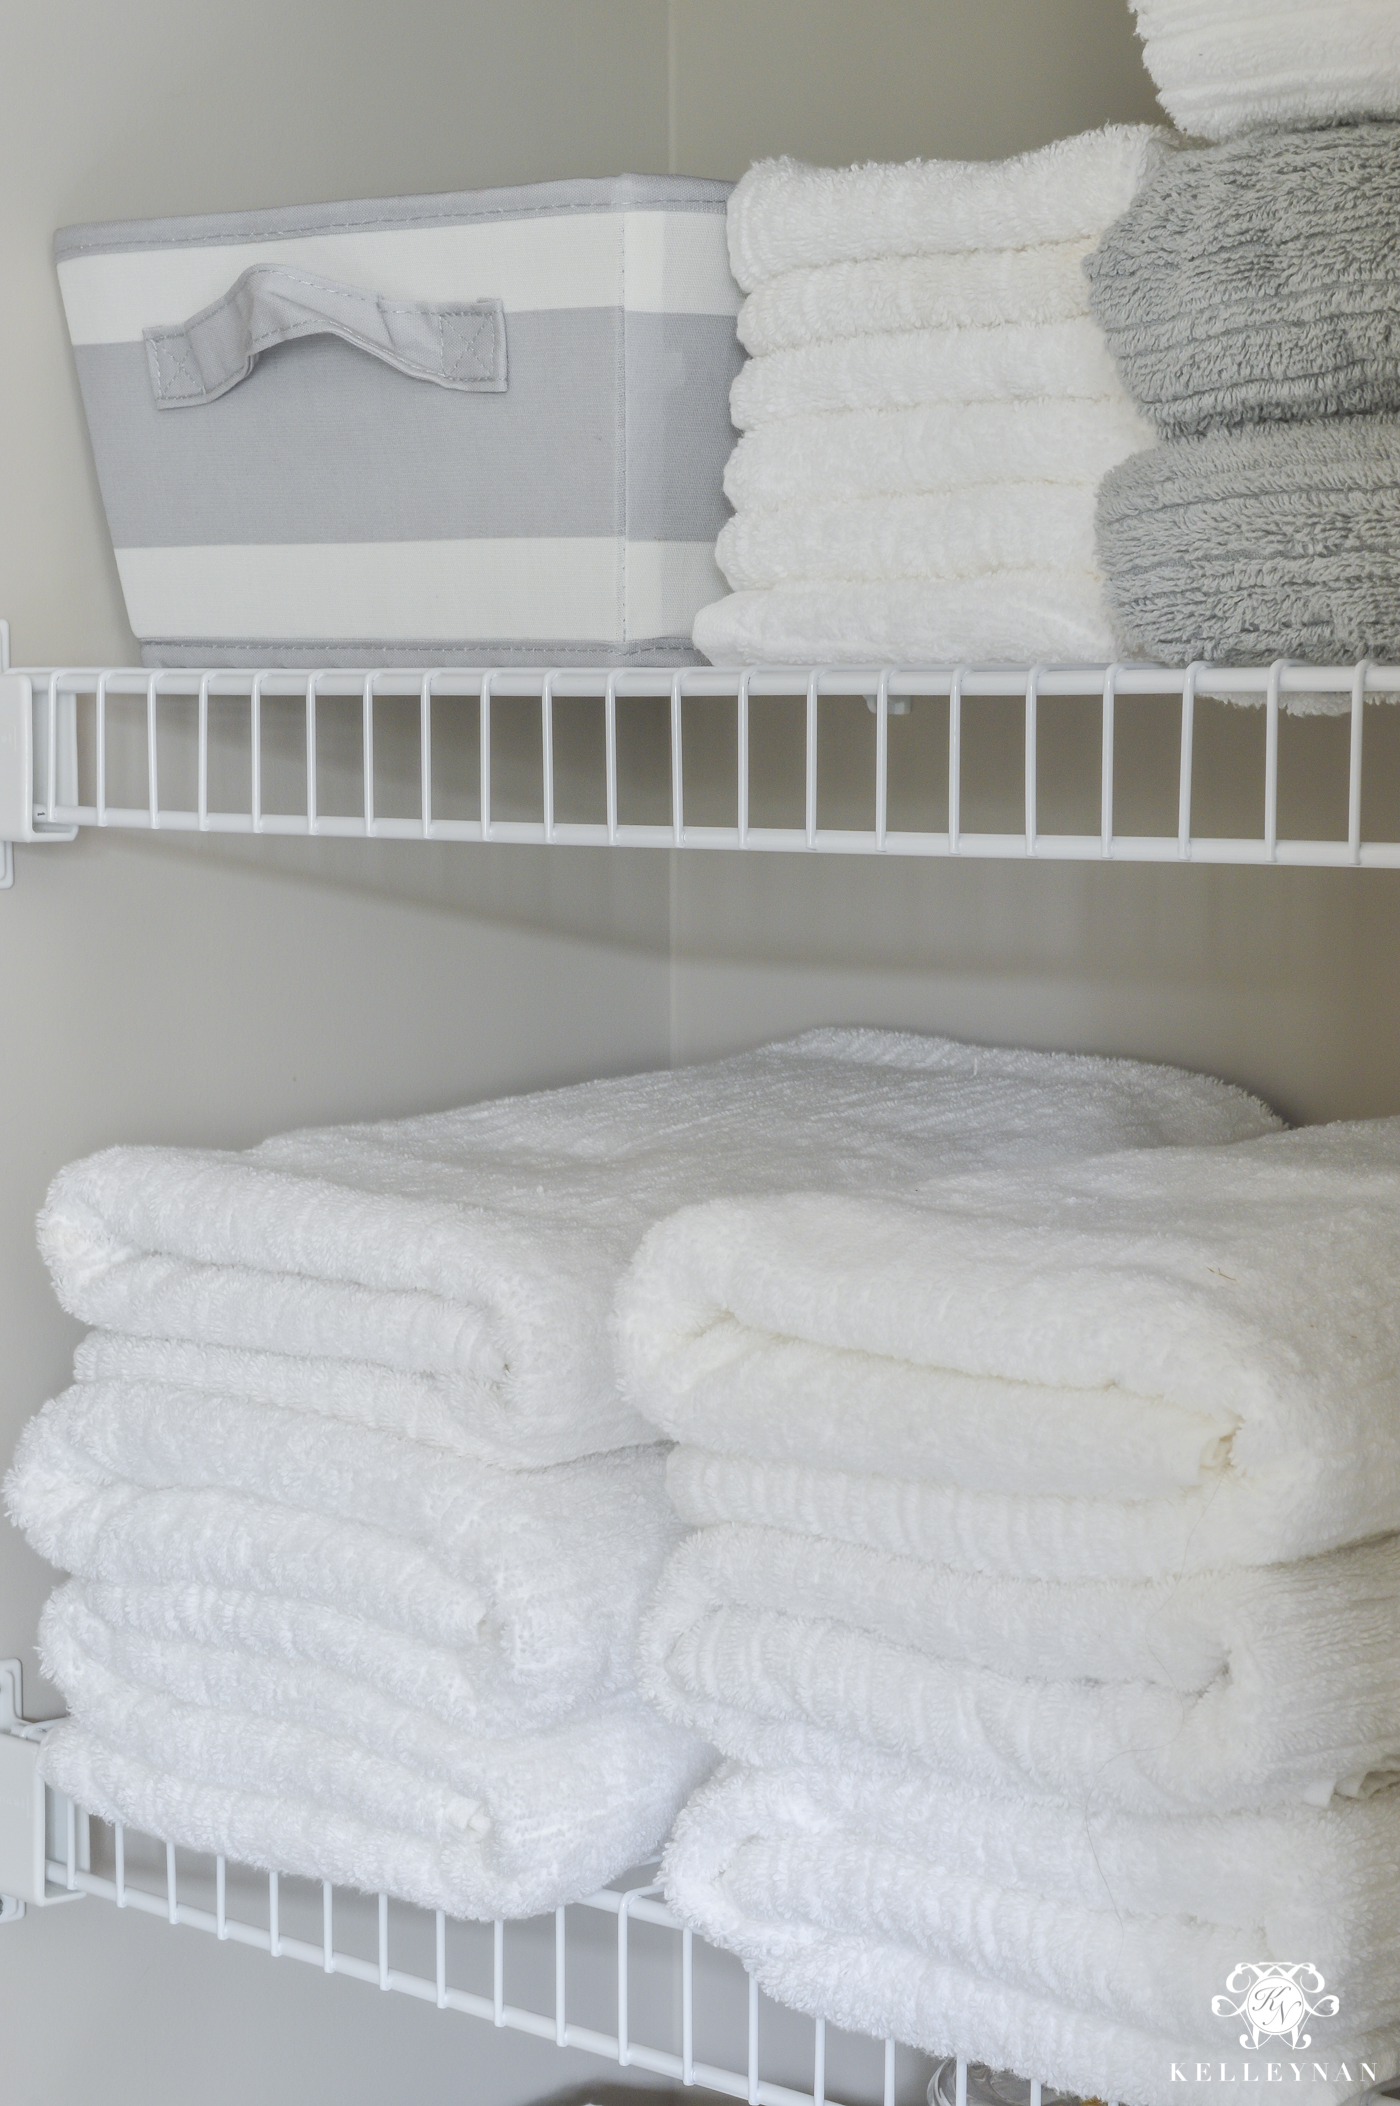 https://kelleynan.com/wp-content/uploads/2017/01/Organized-Bathroom-Linen-Closet-with-Towels-and-Baskets-6-of-14.jpg